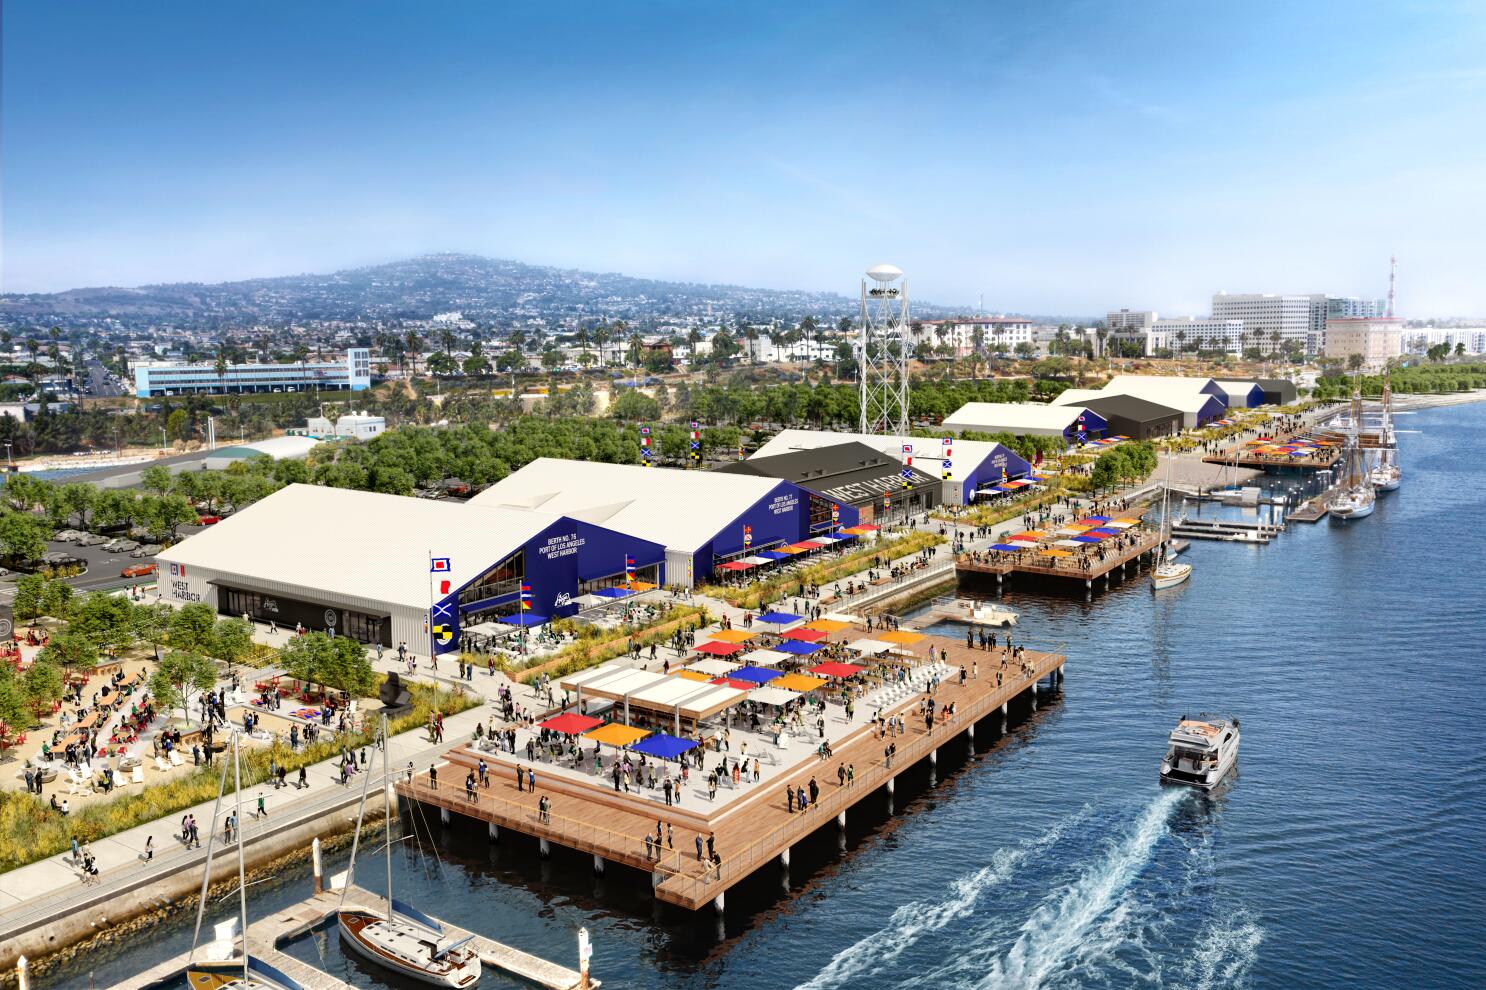 Panama City, Florida marina sees start of new hotel construction